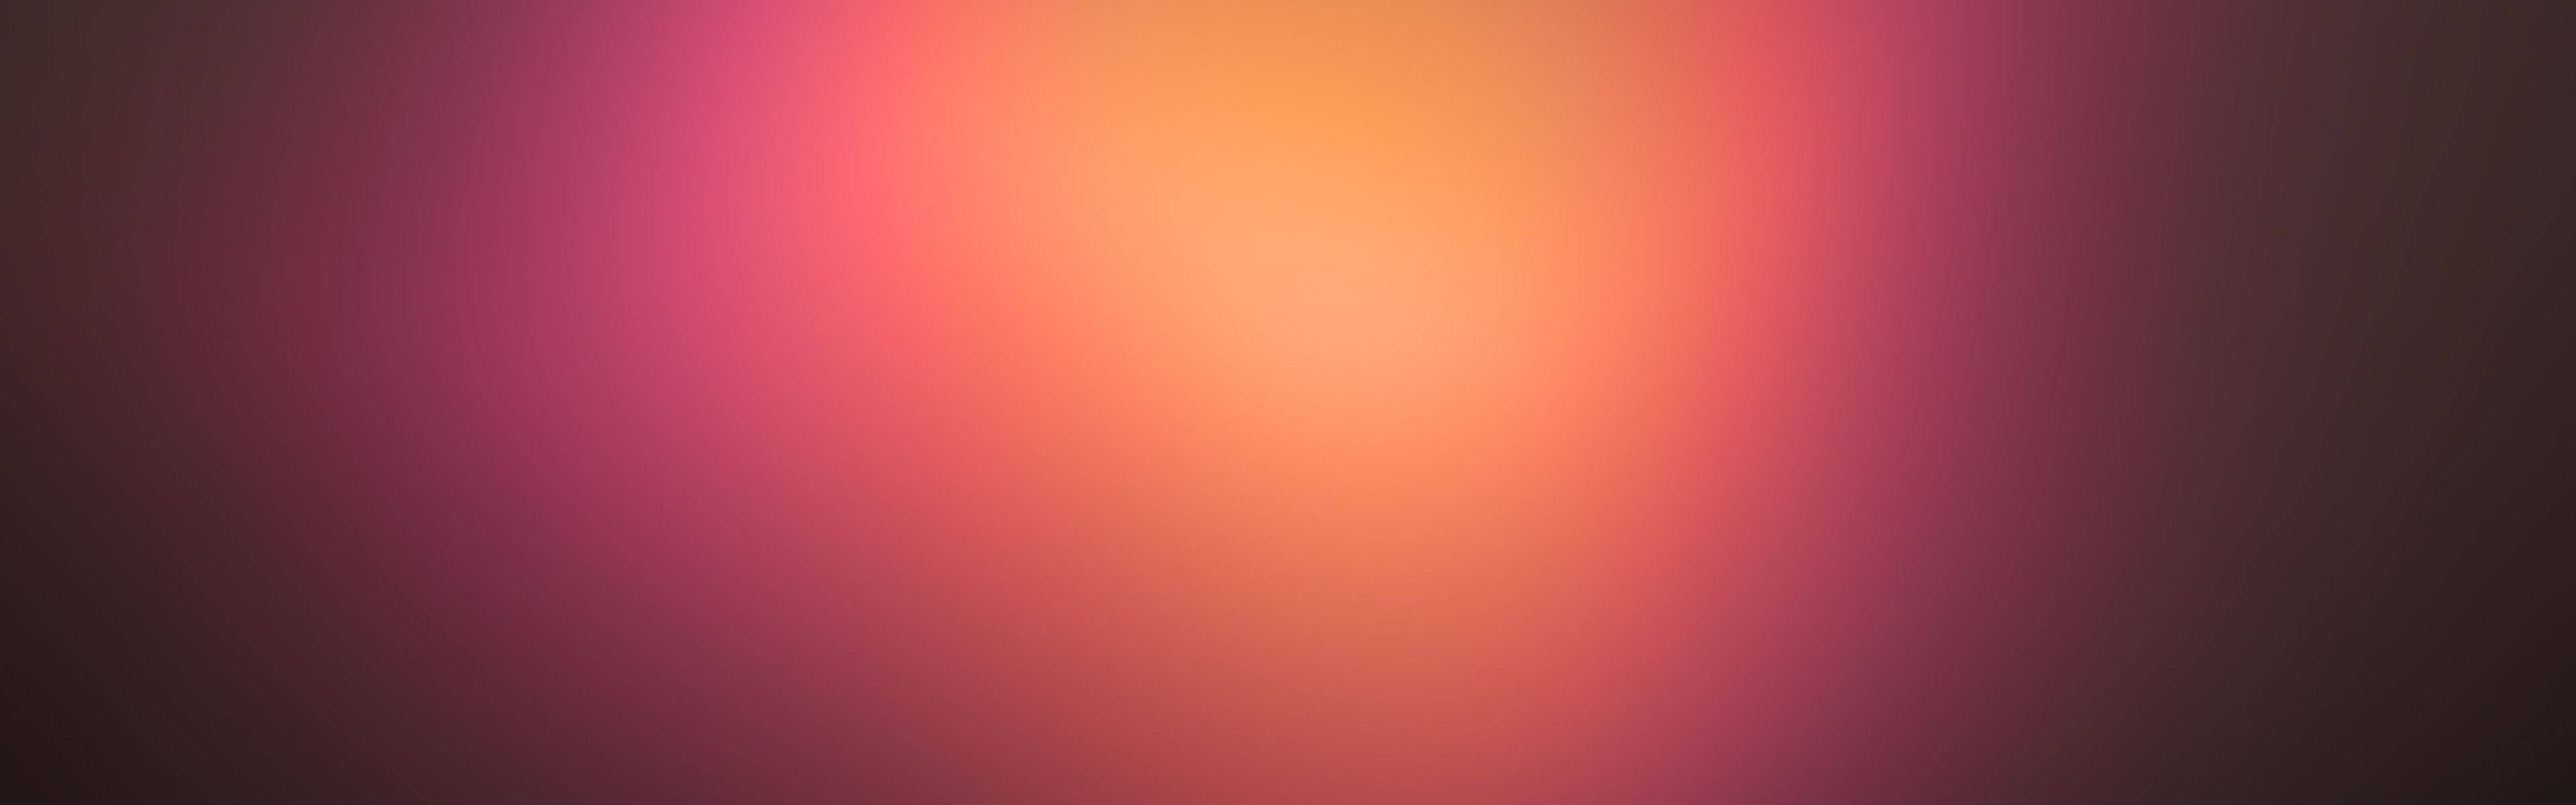 A Beautiful Pink Blur Background Background